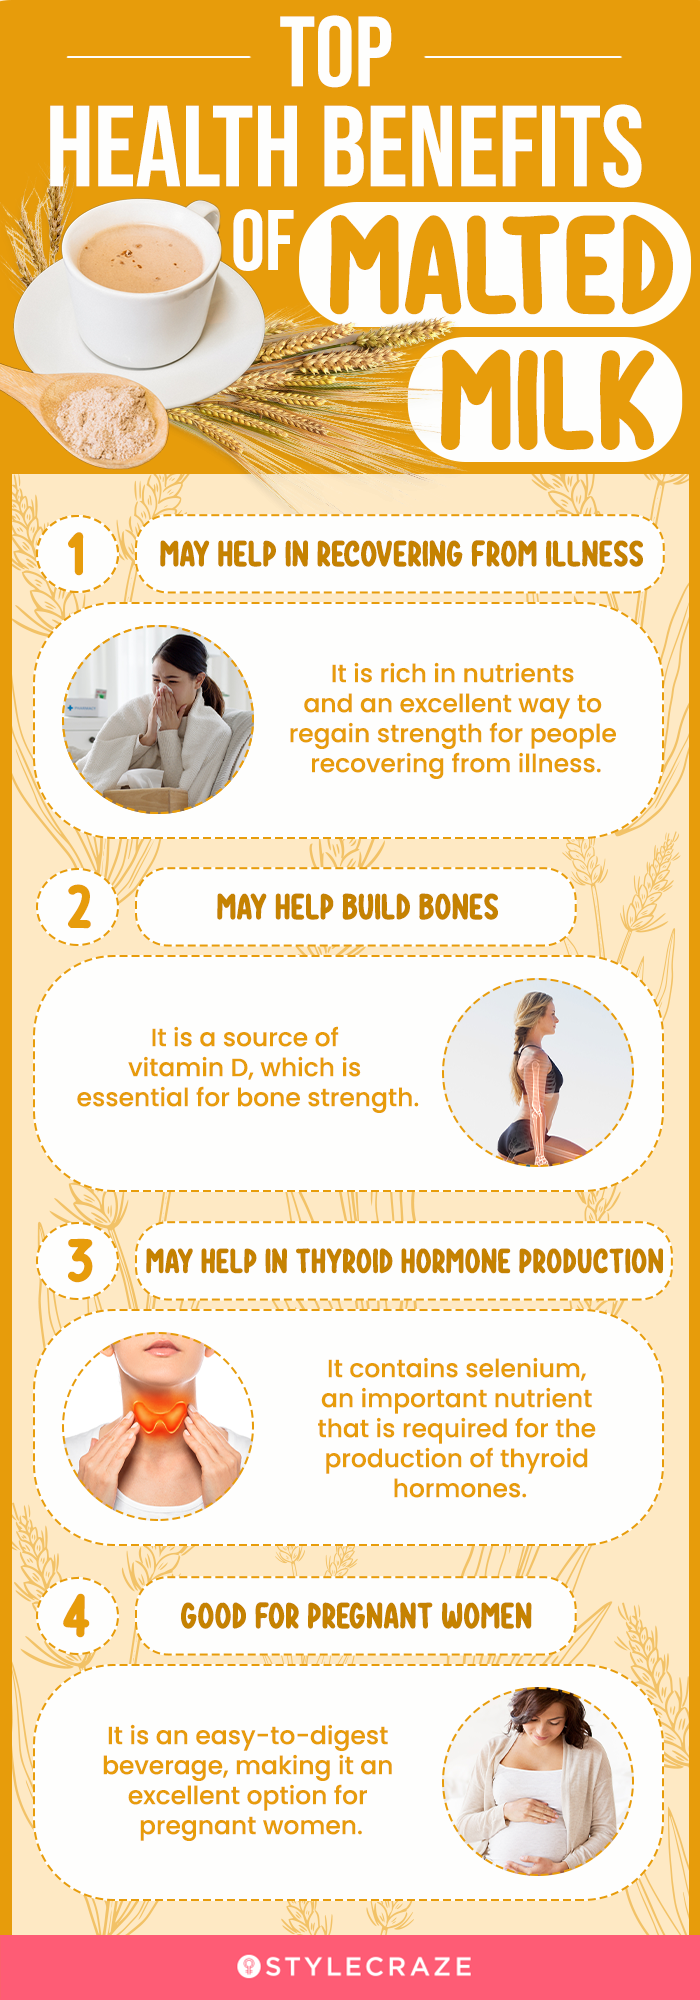 top health benefits of malted milk [infographic]